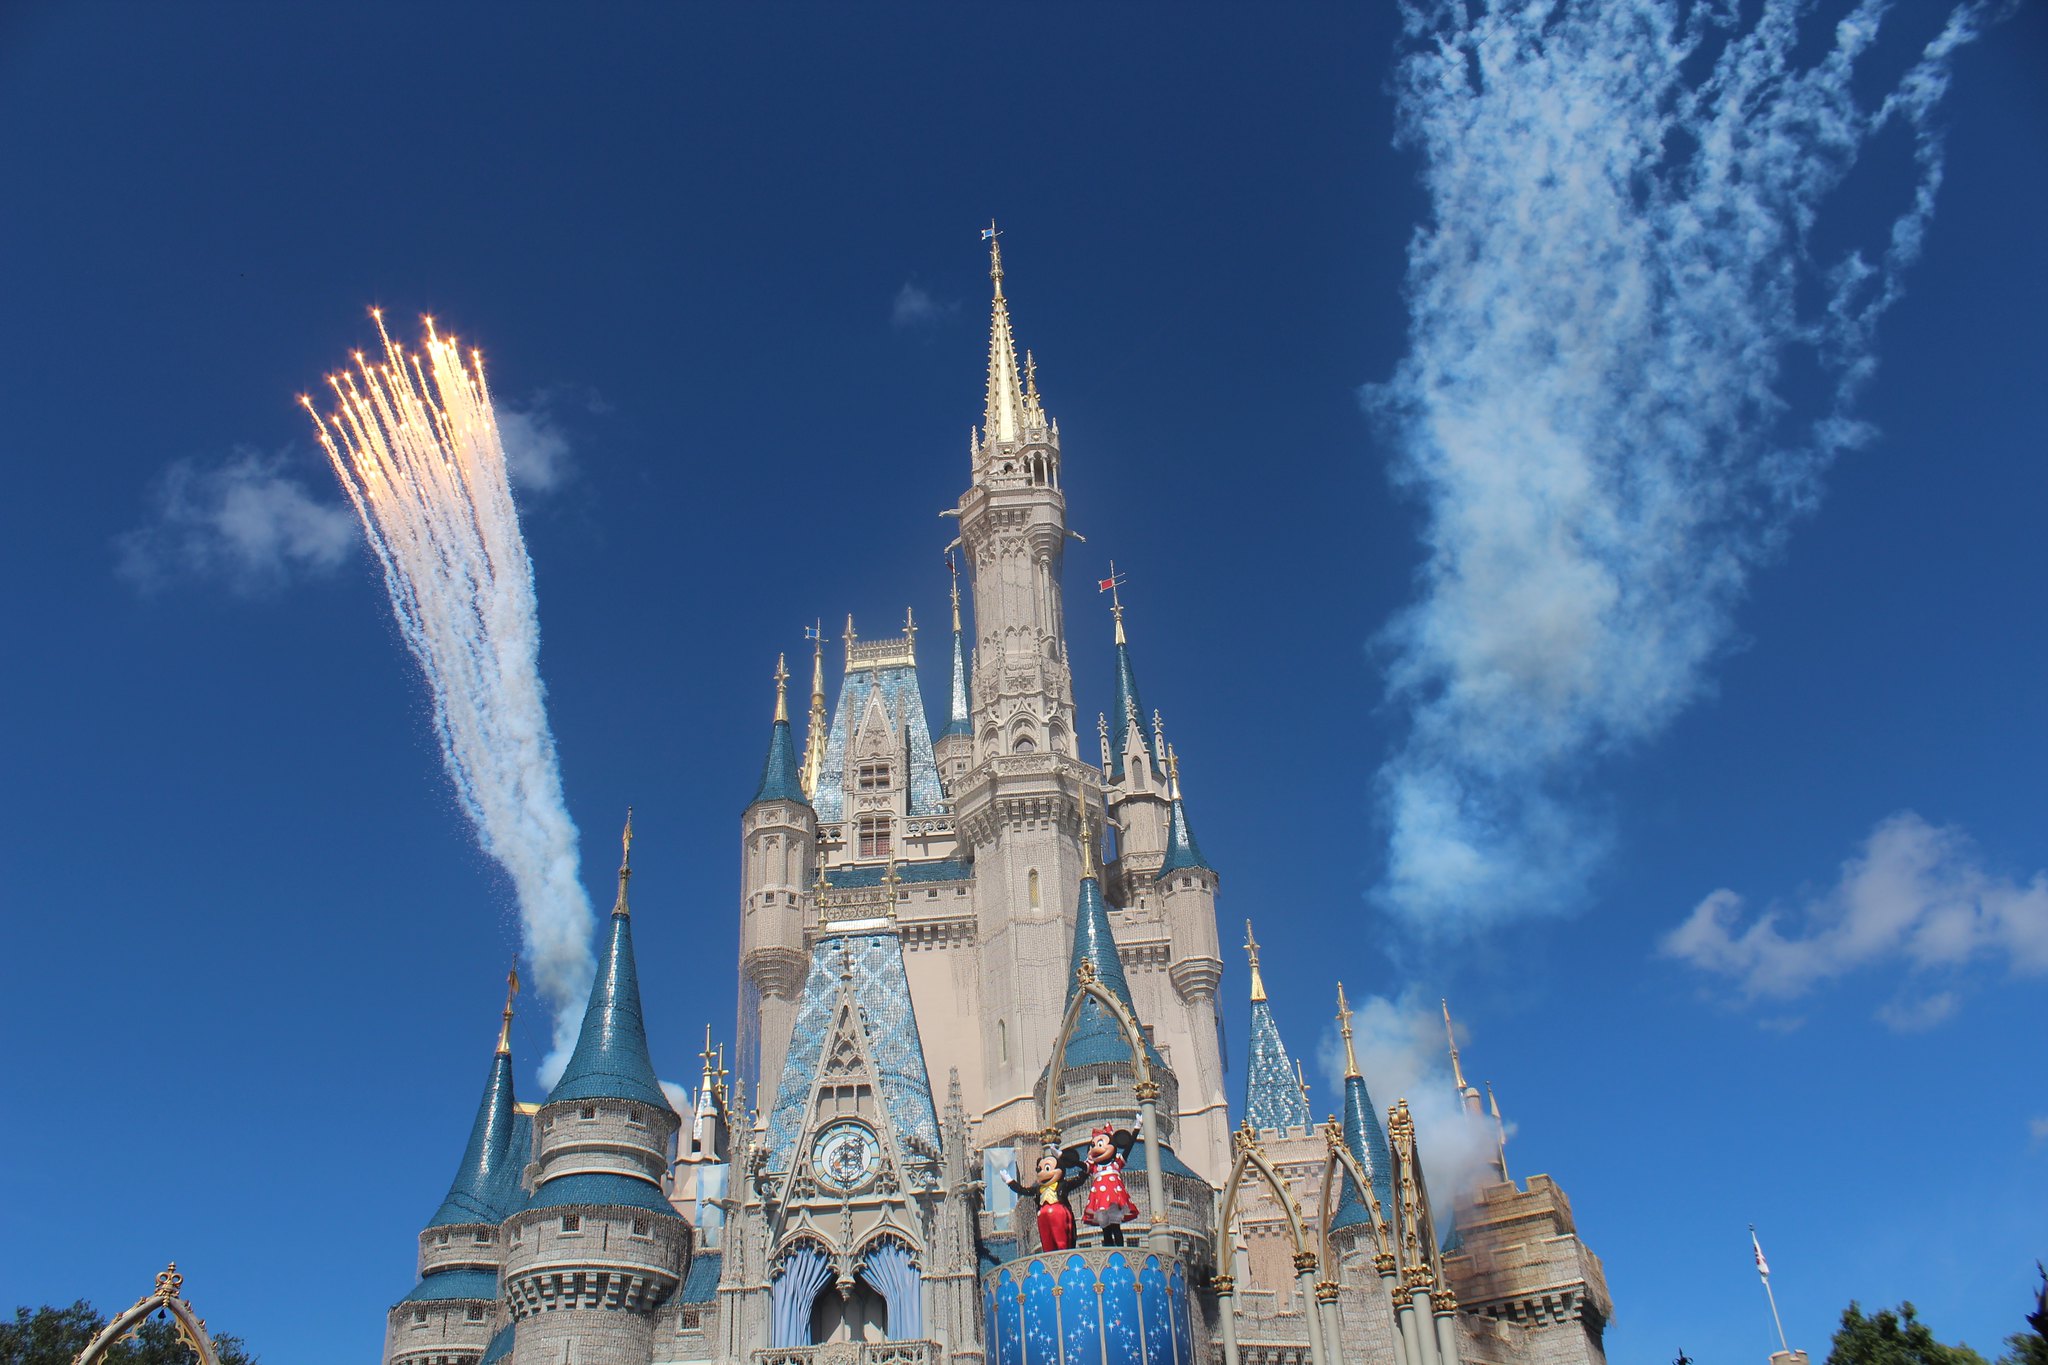 Castle with fireworks, Walt Disney World